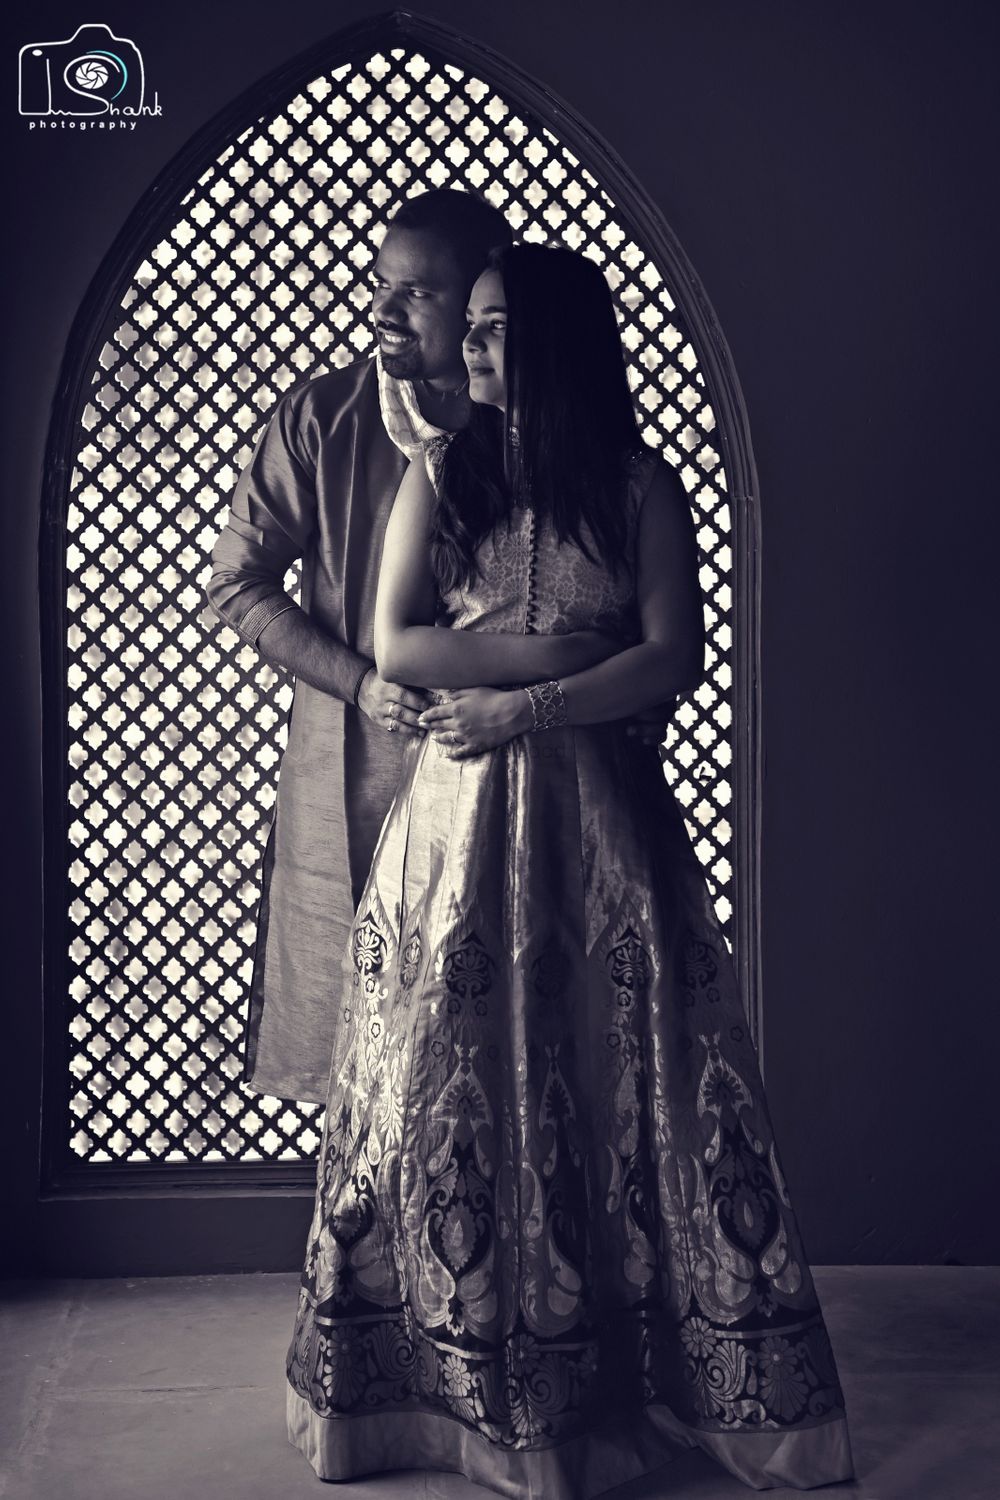 Photo From Prewedding- Ankesh and Shreya - By Ishank Photography